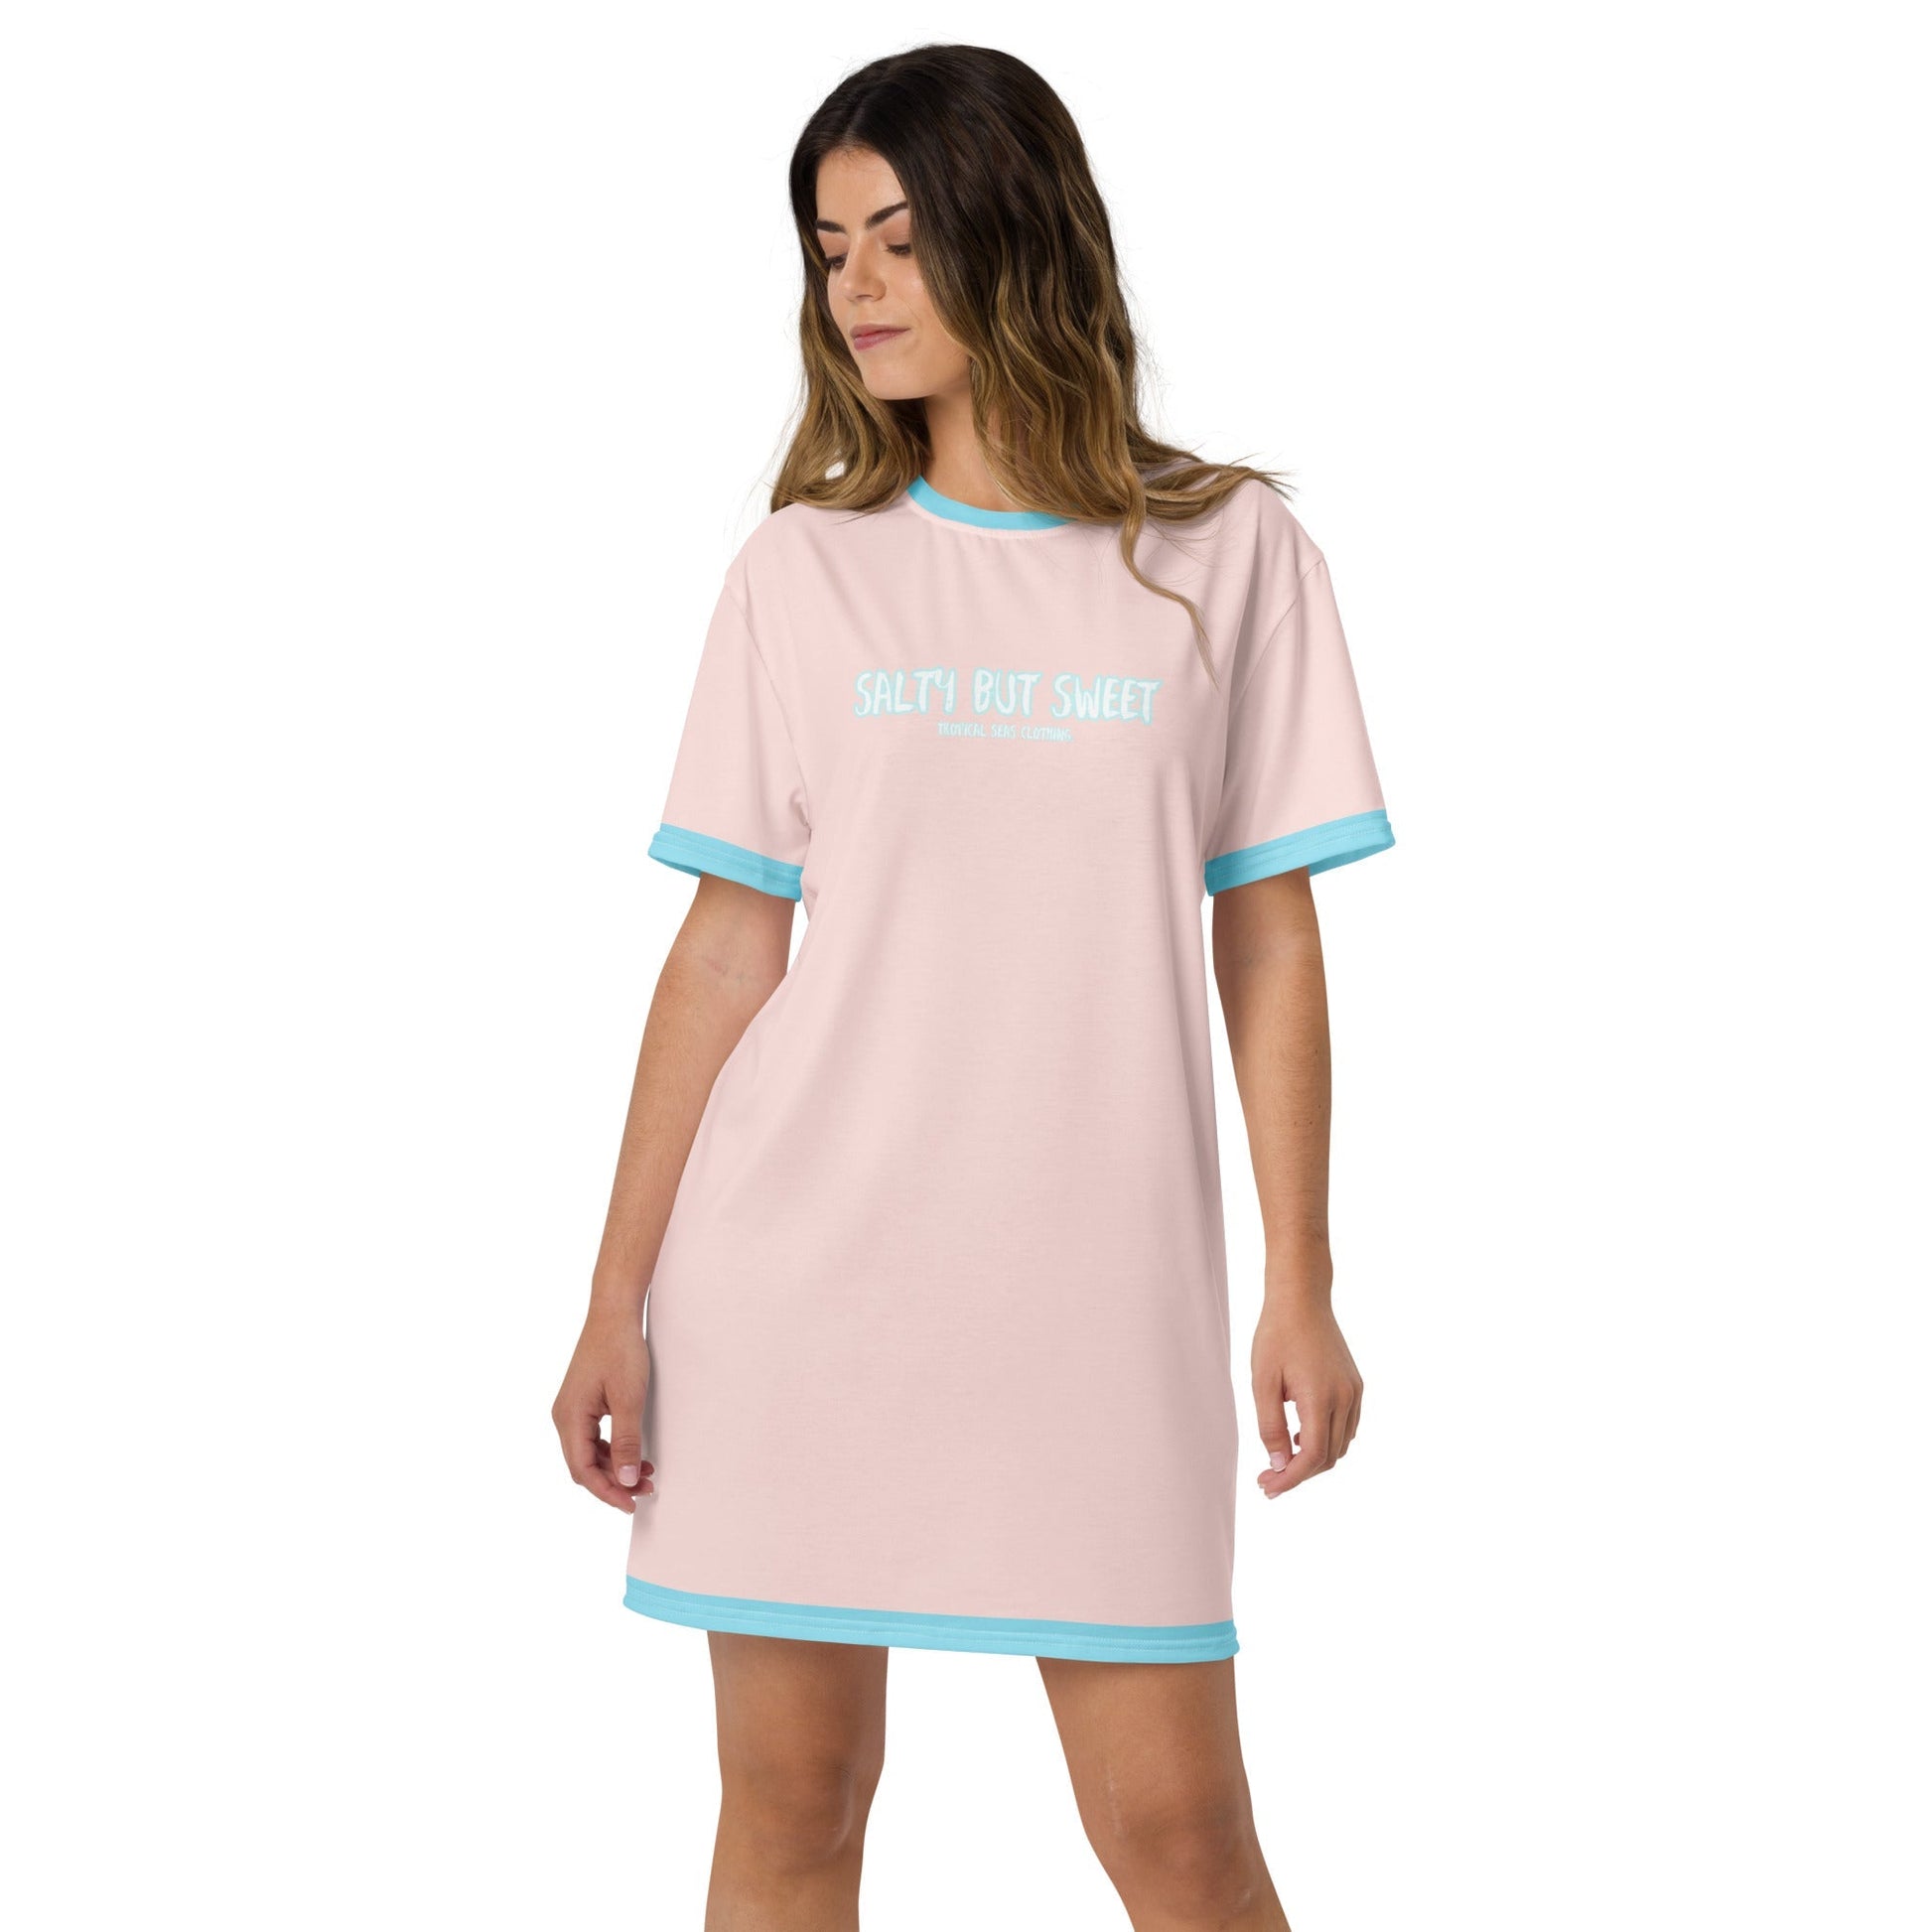 Women's Salty but Sweet T-shirt dress - Tropical Seas Clothing 